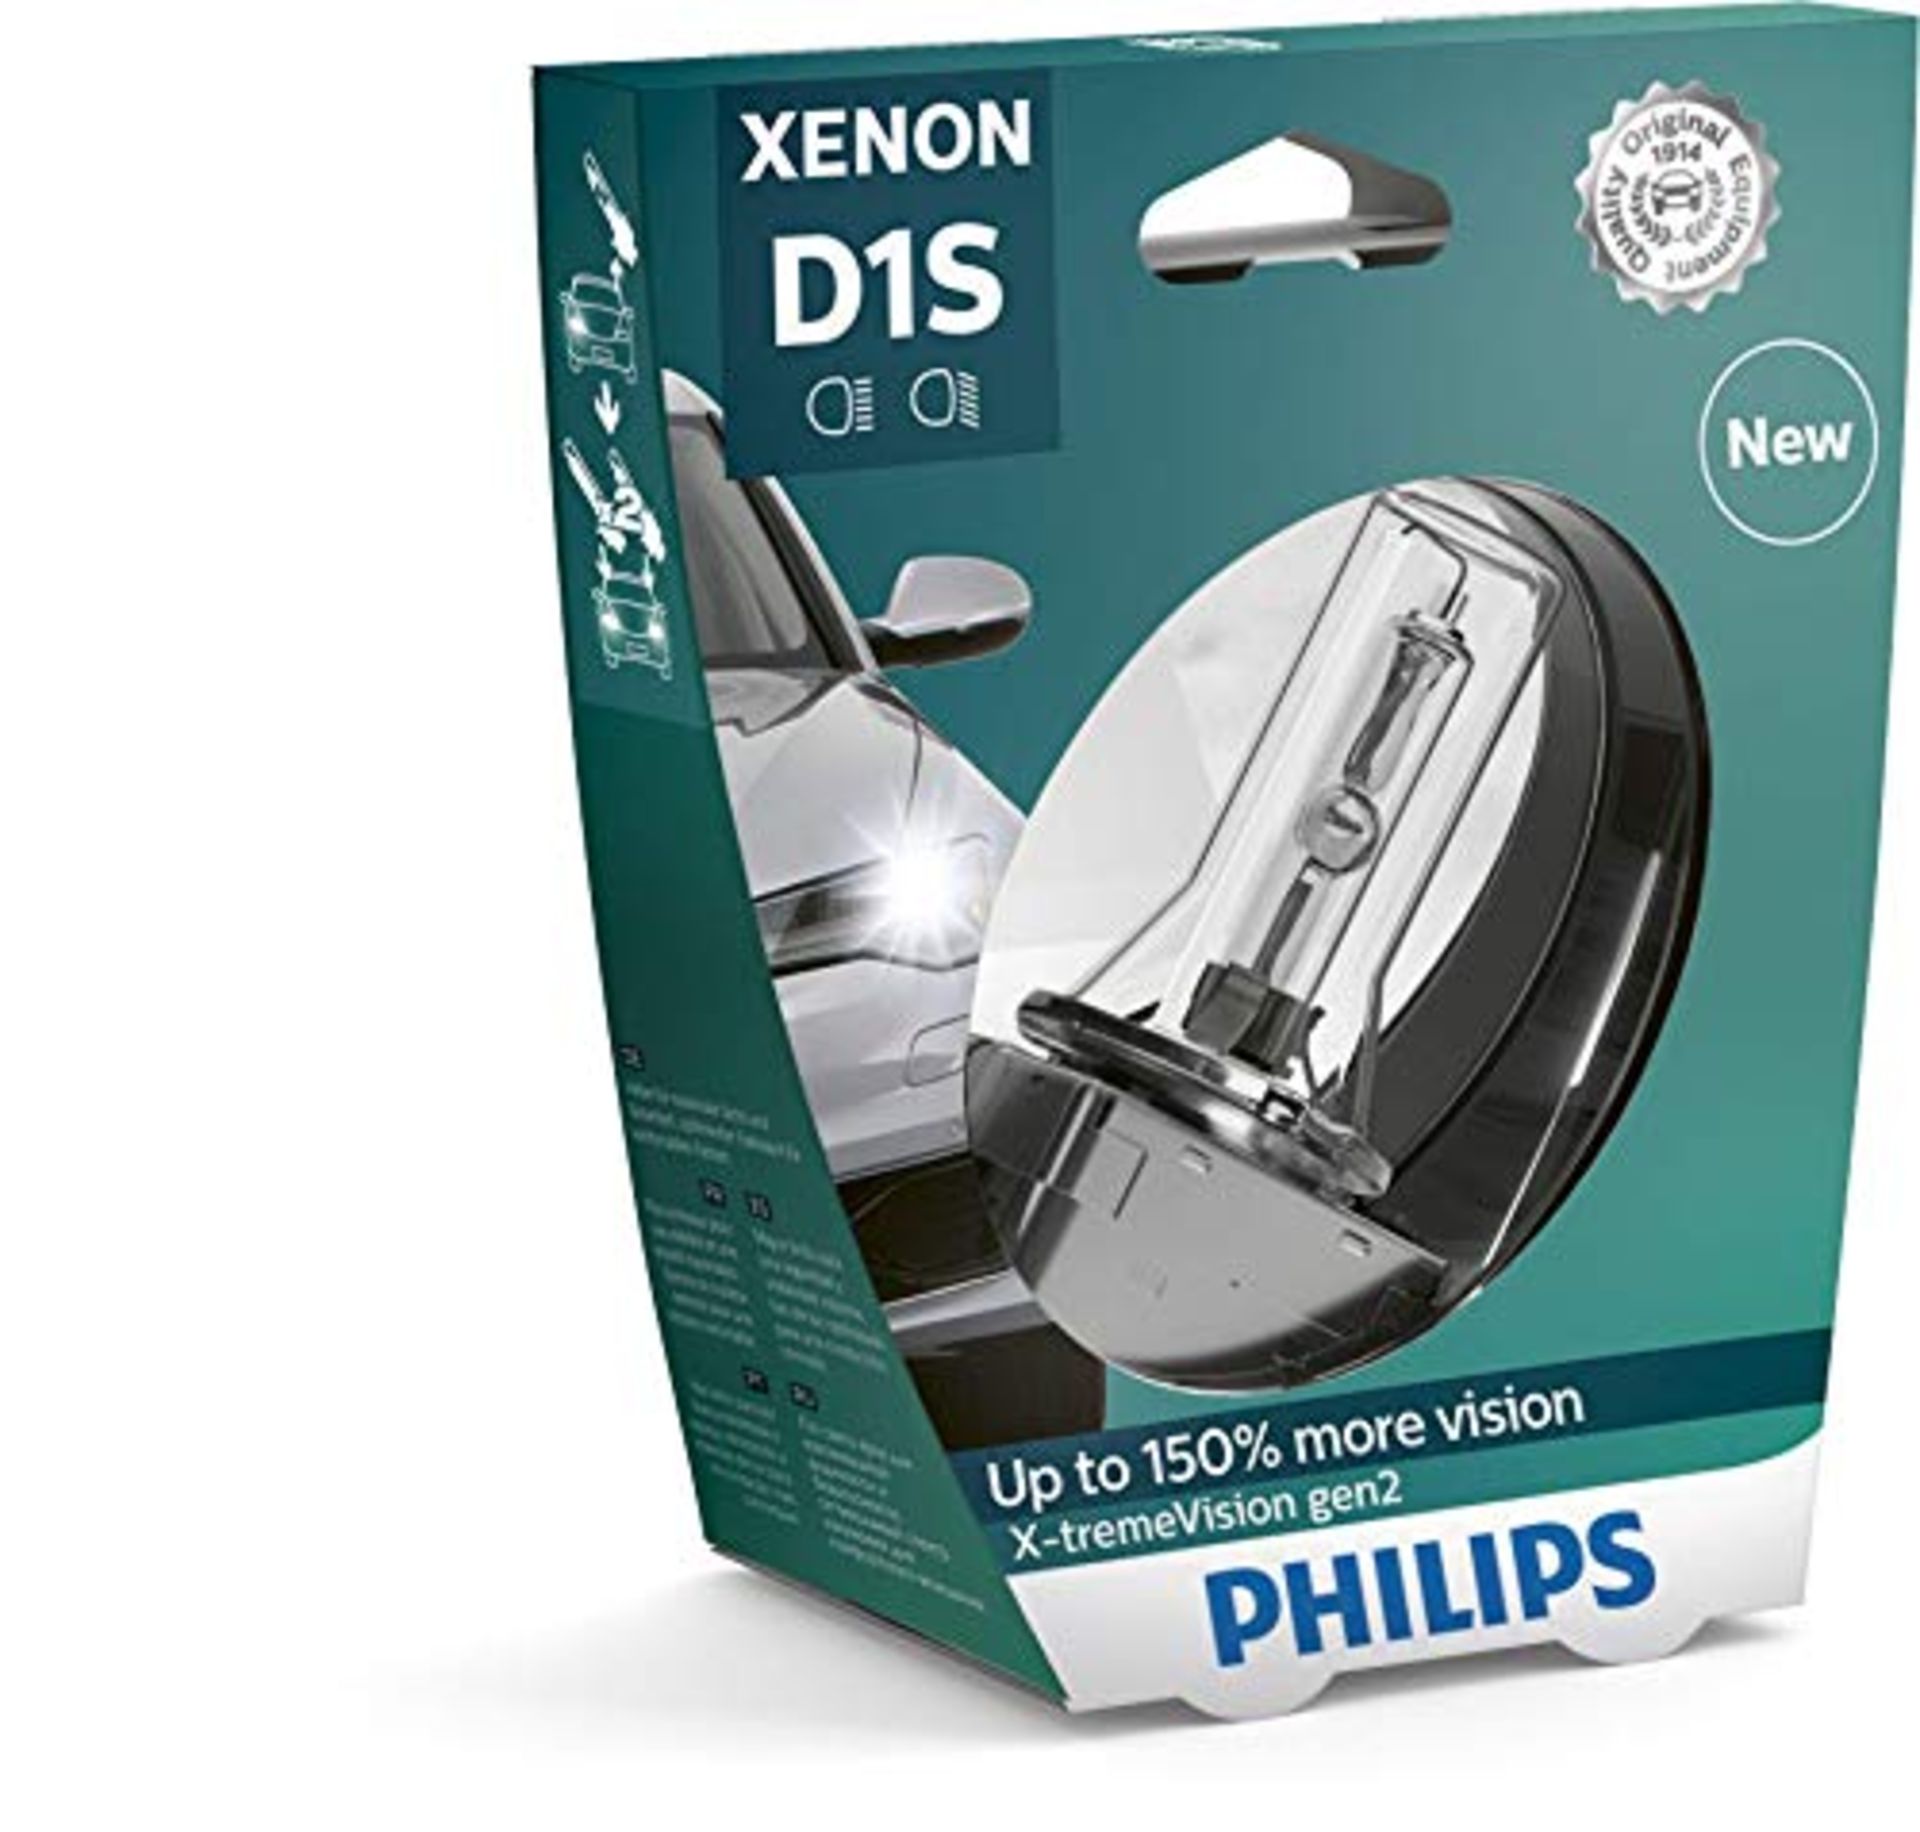 RRP £65.00 Philips 85415XV2S1 X-tremeVision gen2 Xenon headlight bulb D1S, single blister